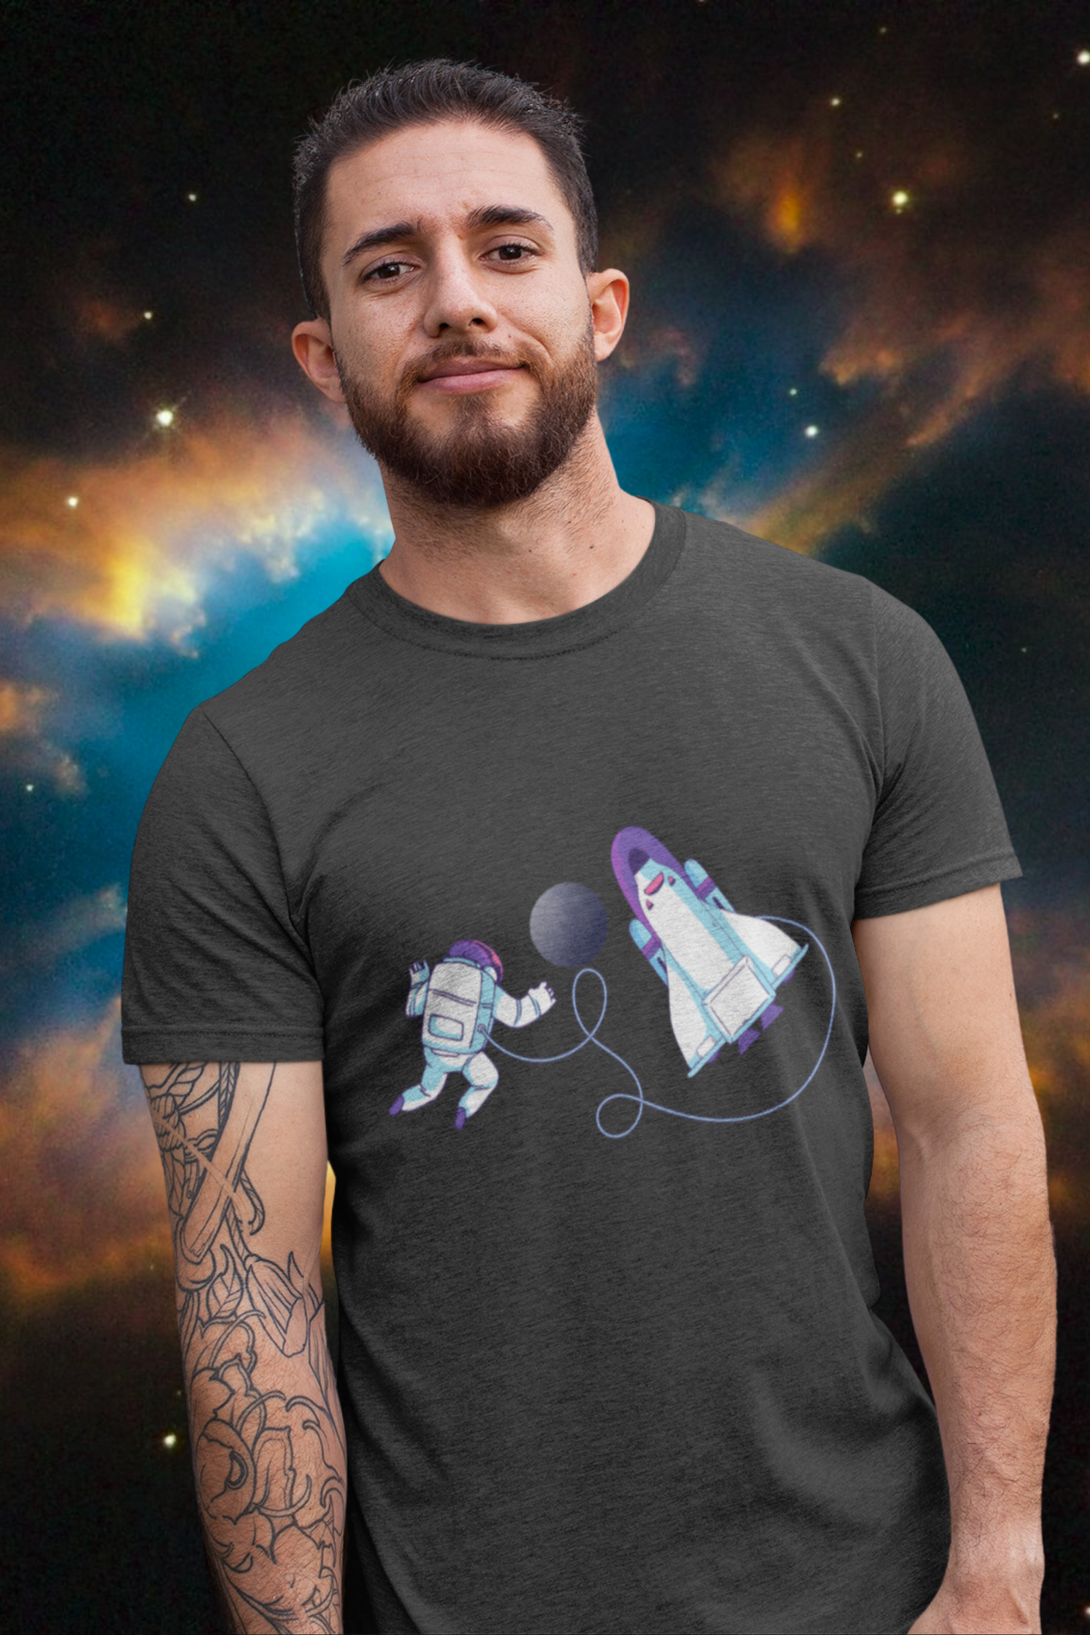 Cosmic Spacewalk Printed T-Shirt For Men - WowWaves - 5